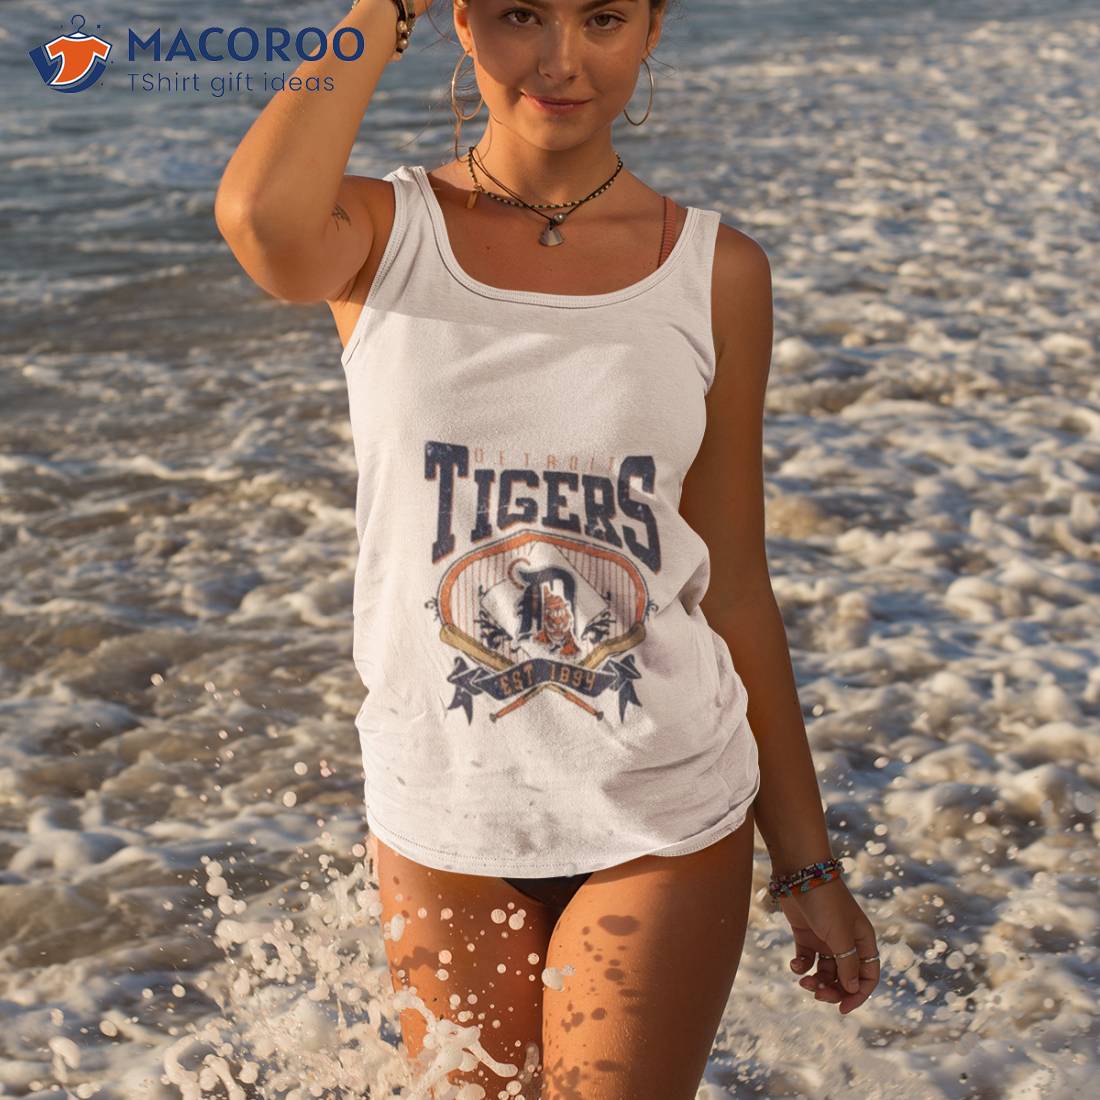 Vintage Detroit Tigers Logo 7 T-Shirt